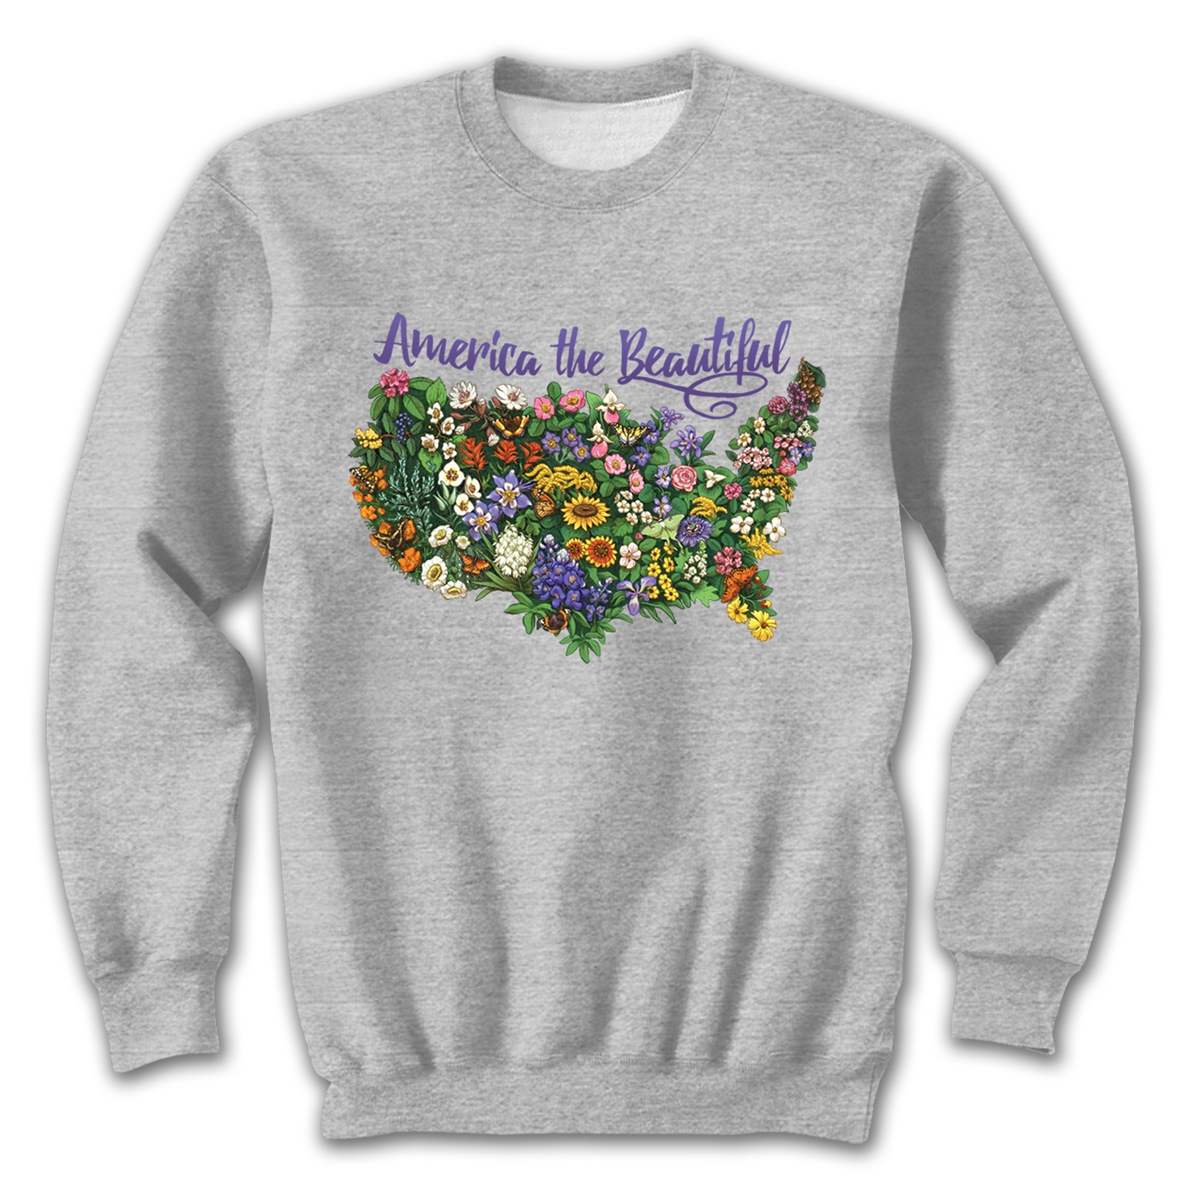 America the Beautiful Sweatshirt